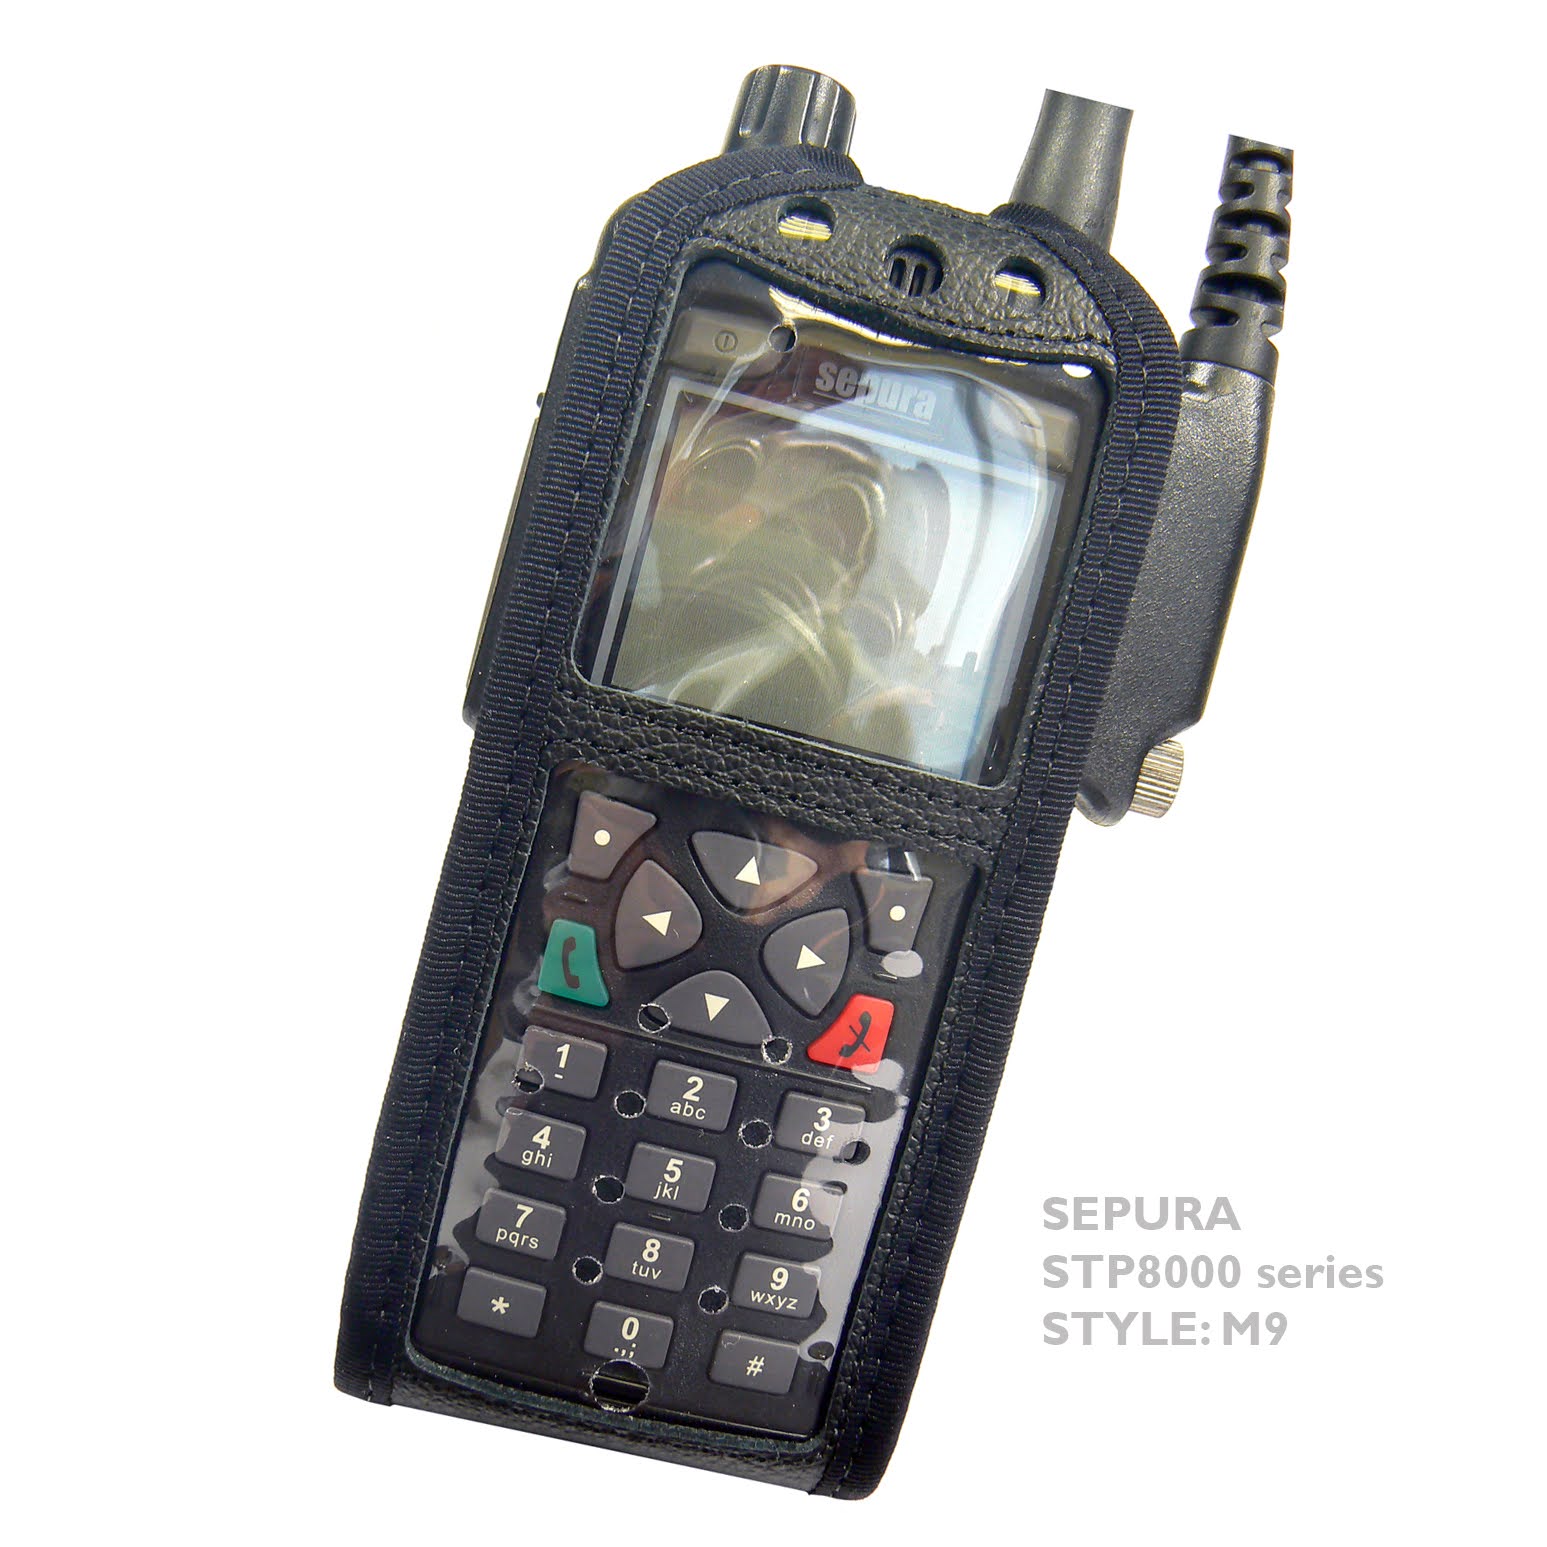 Tetra Sepura STP8000 leather radio case with Click-On